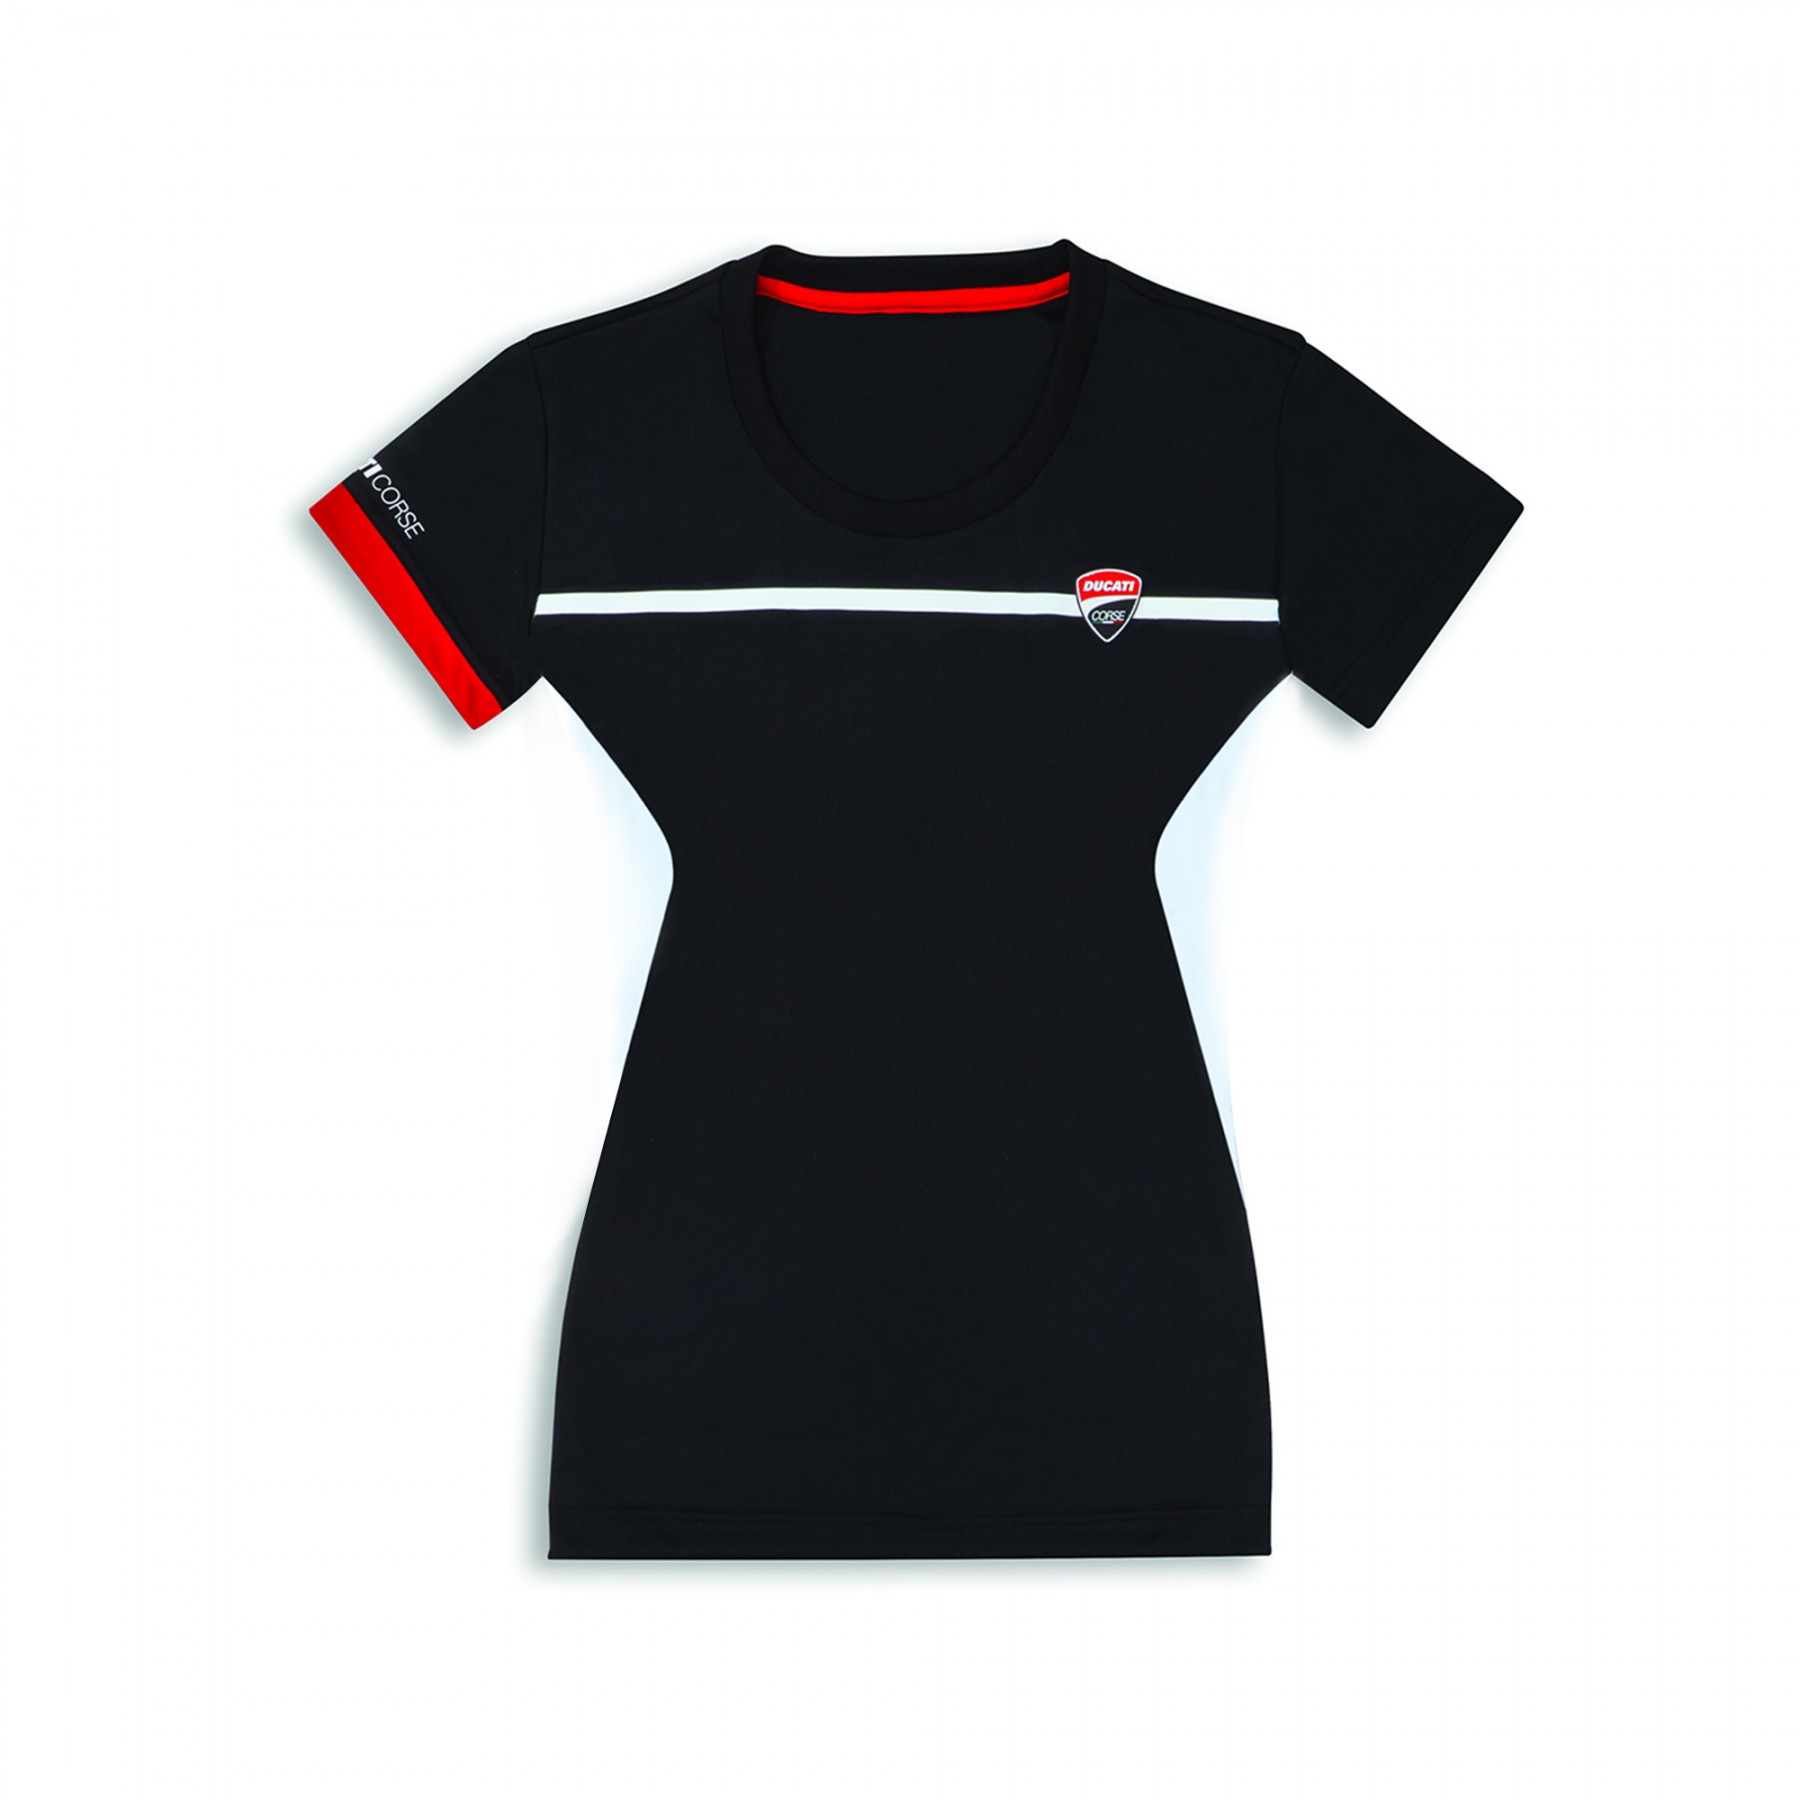 Ducati Corse Sketch T-shirt Black Size Medium 